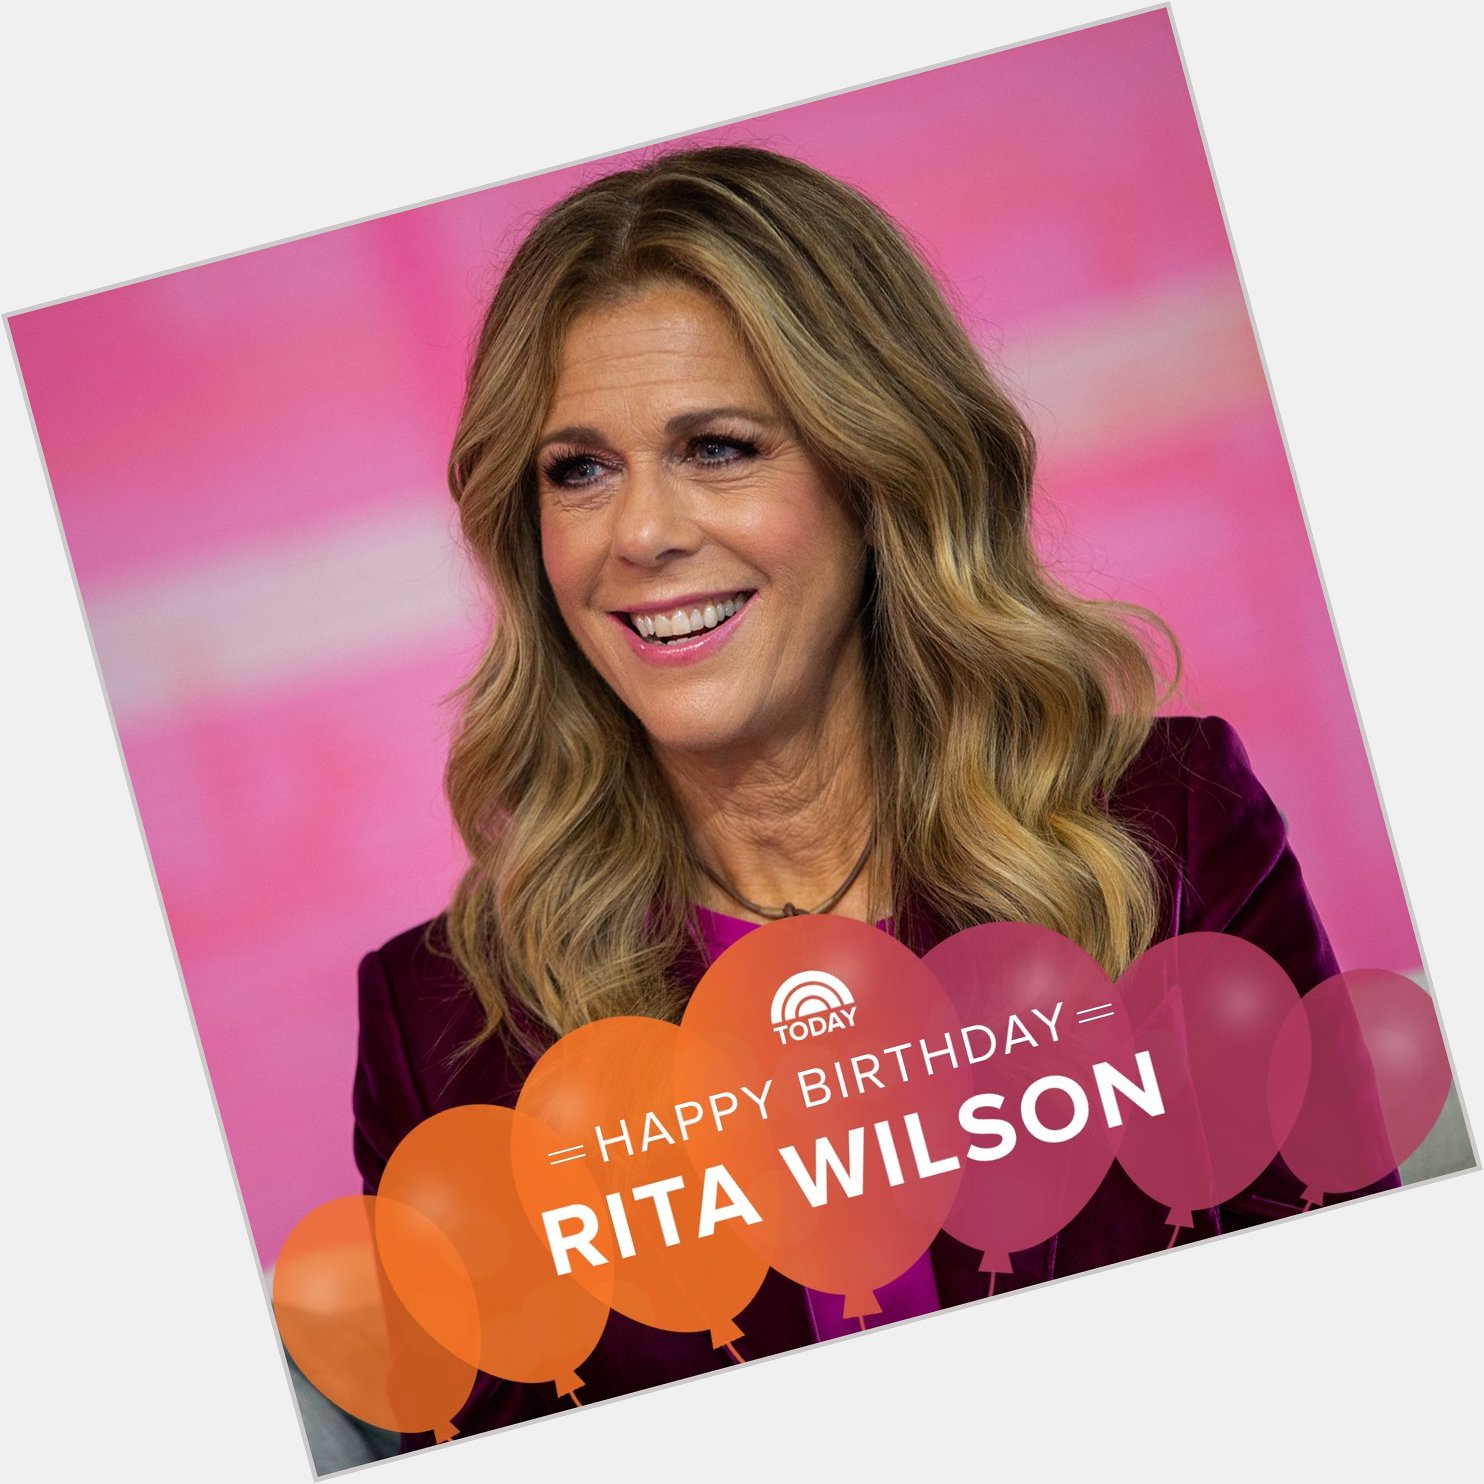 Happy birthday to our friend Rita Wilson! 